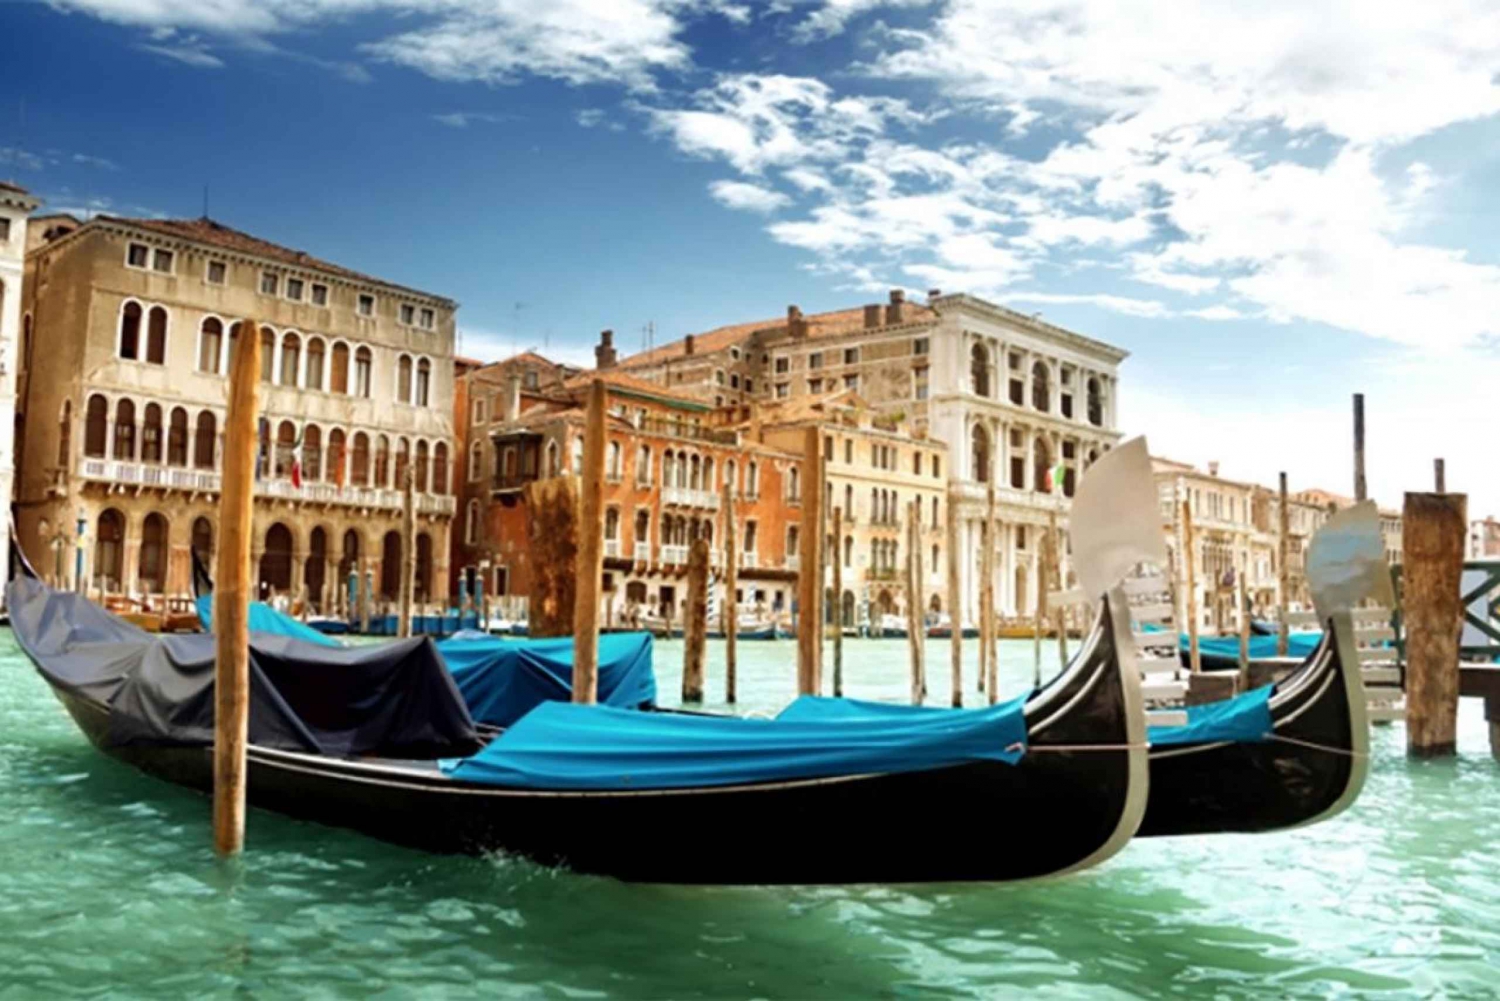 Fascinating Venice - Walking and Gondola